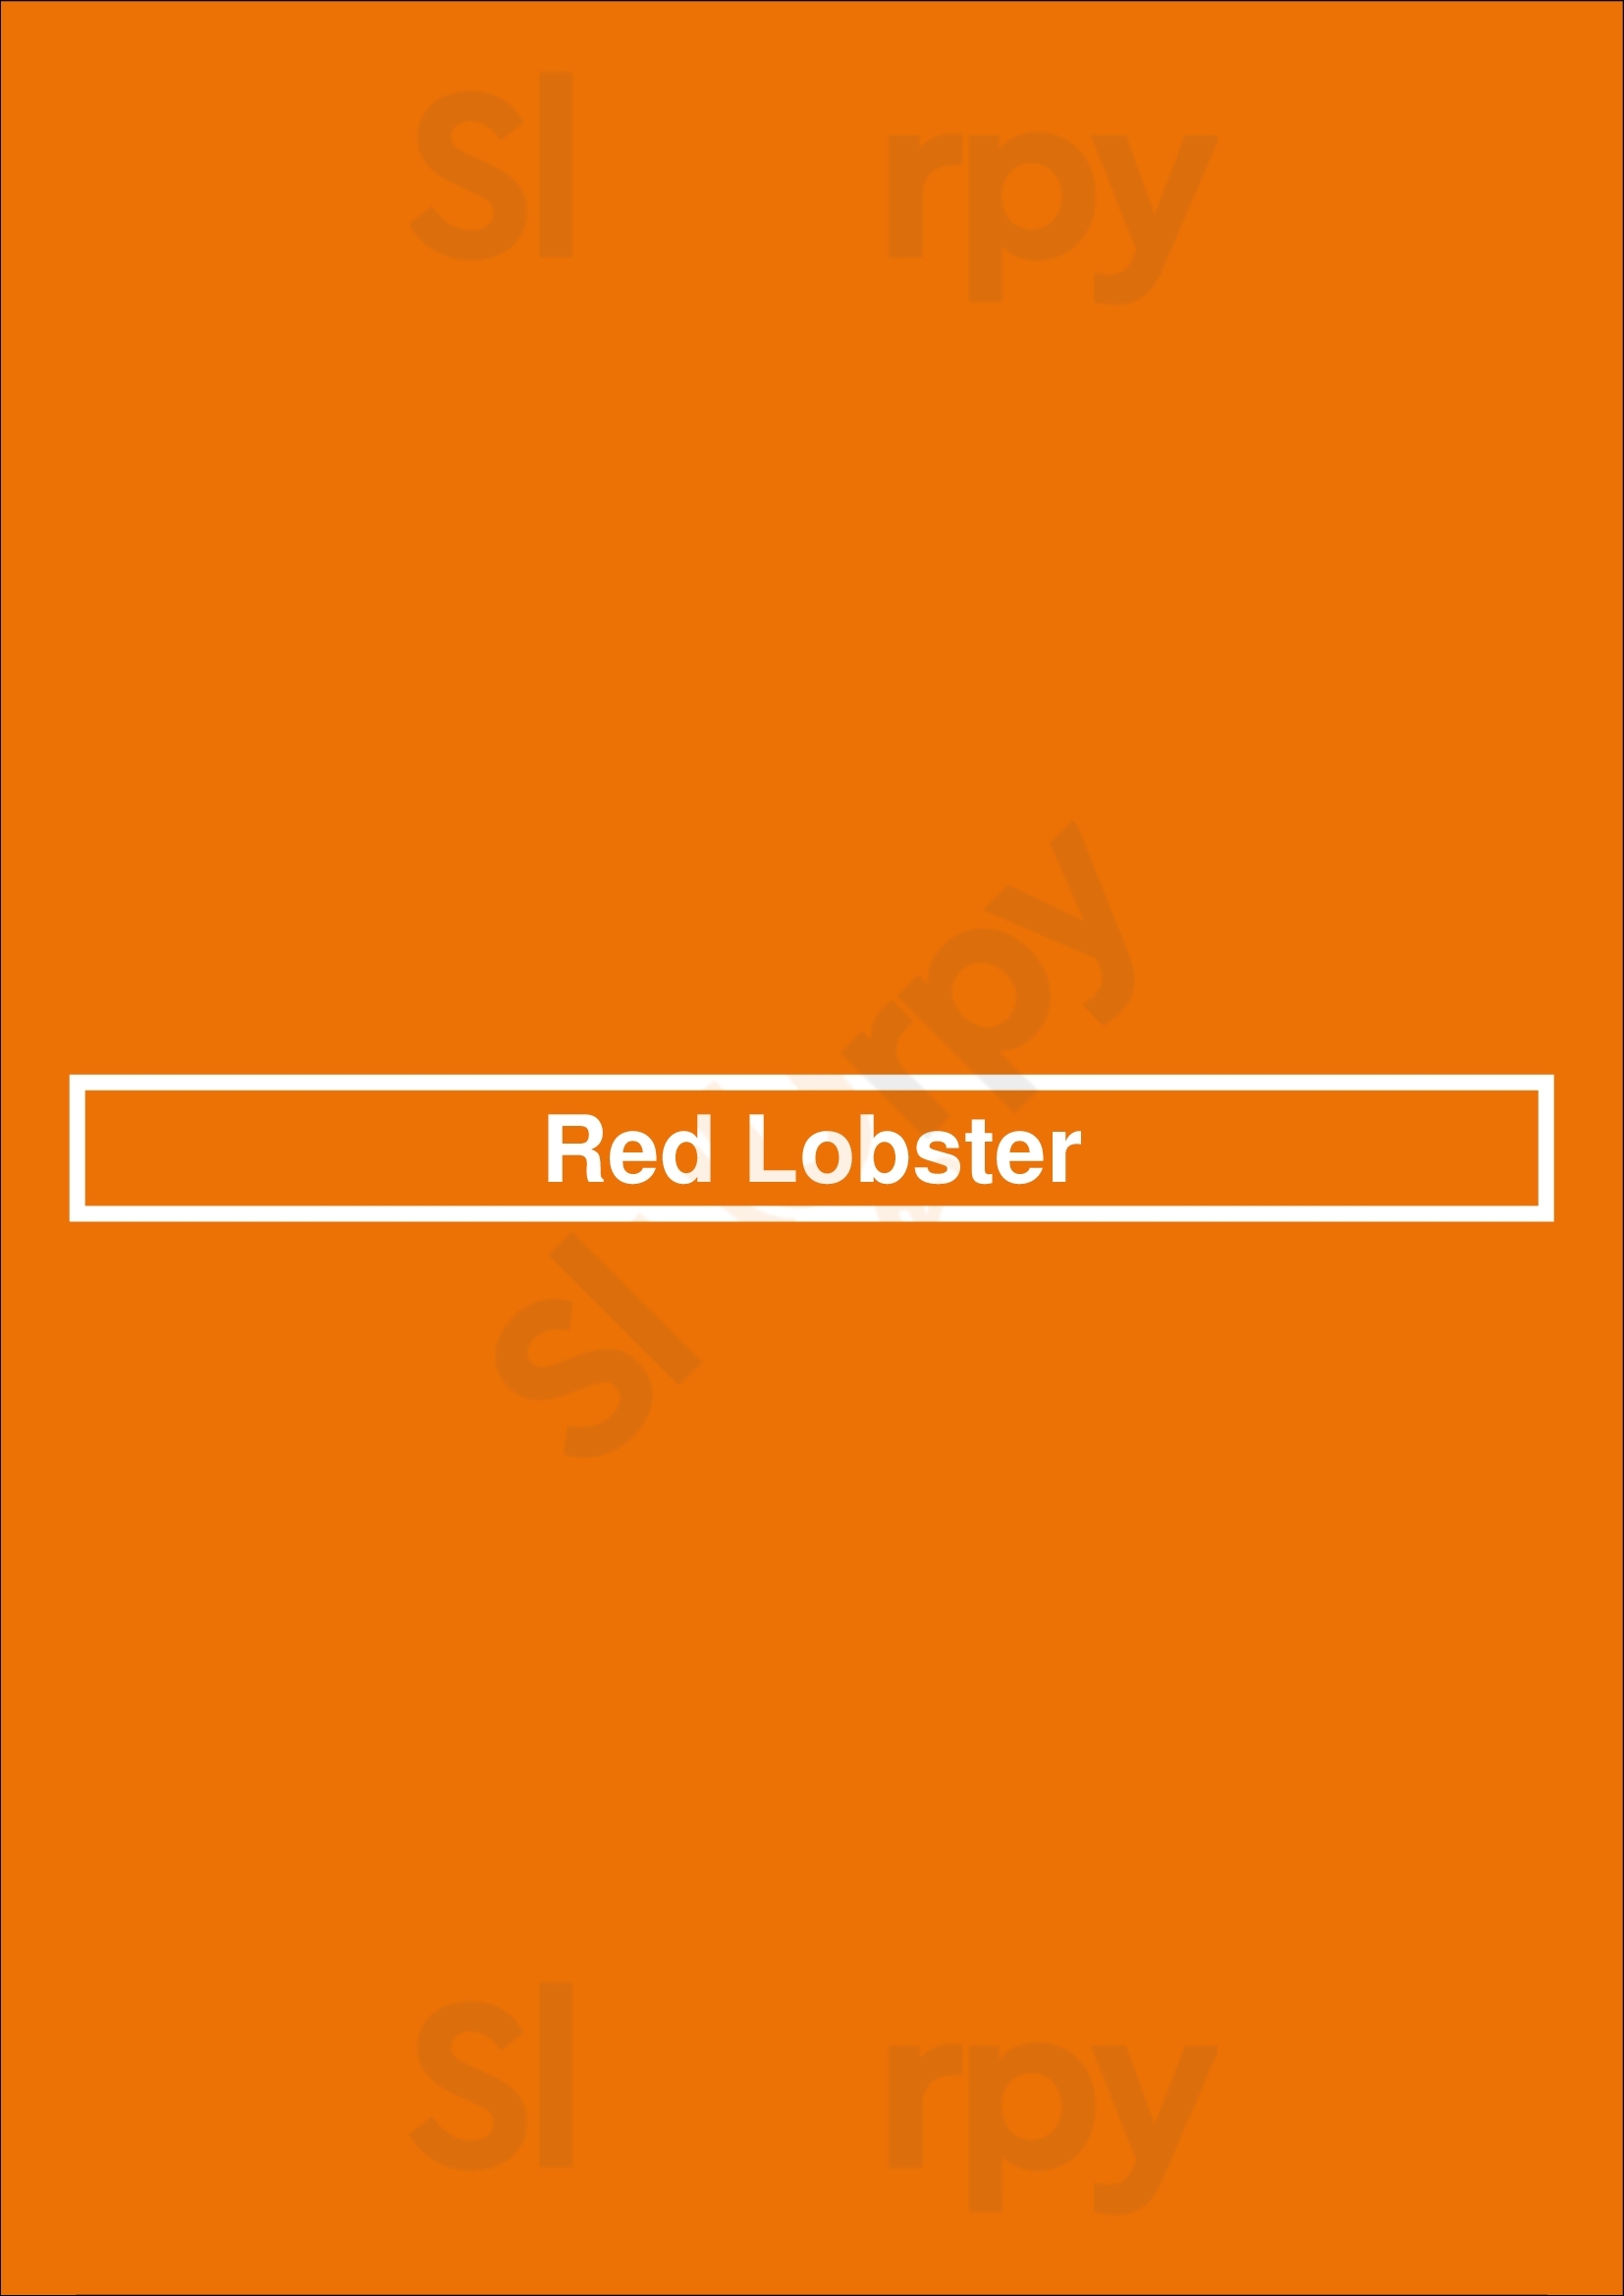 Red Lobster Thornhill Menu - 1